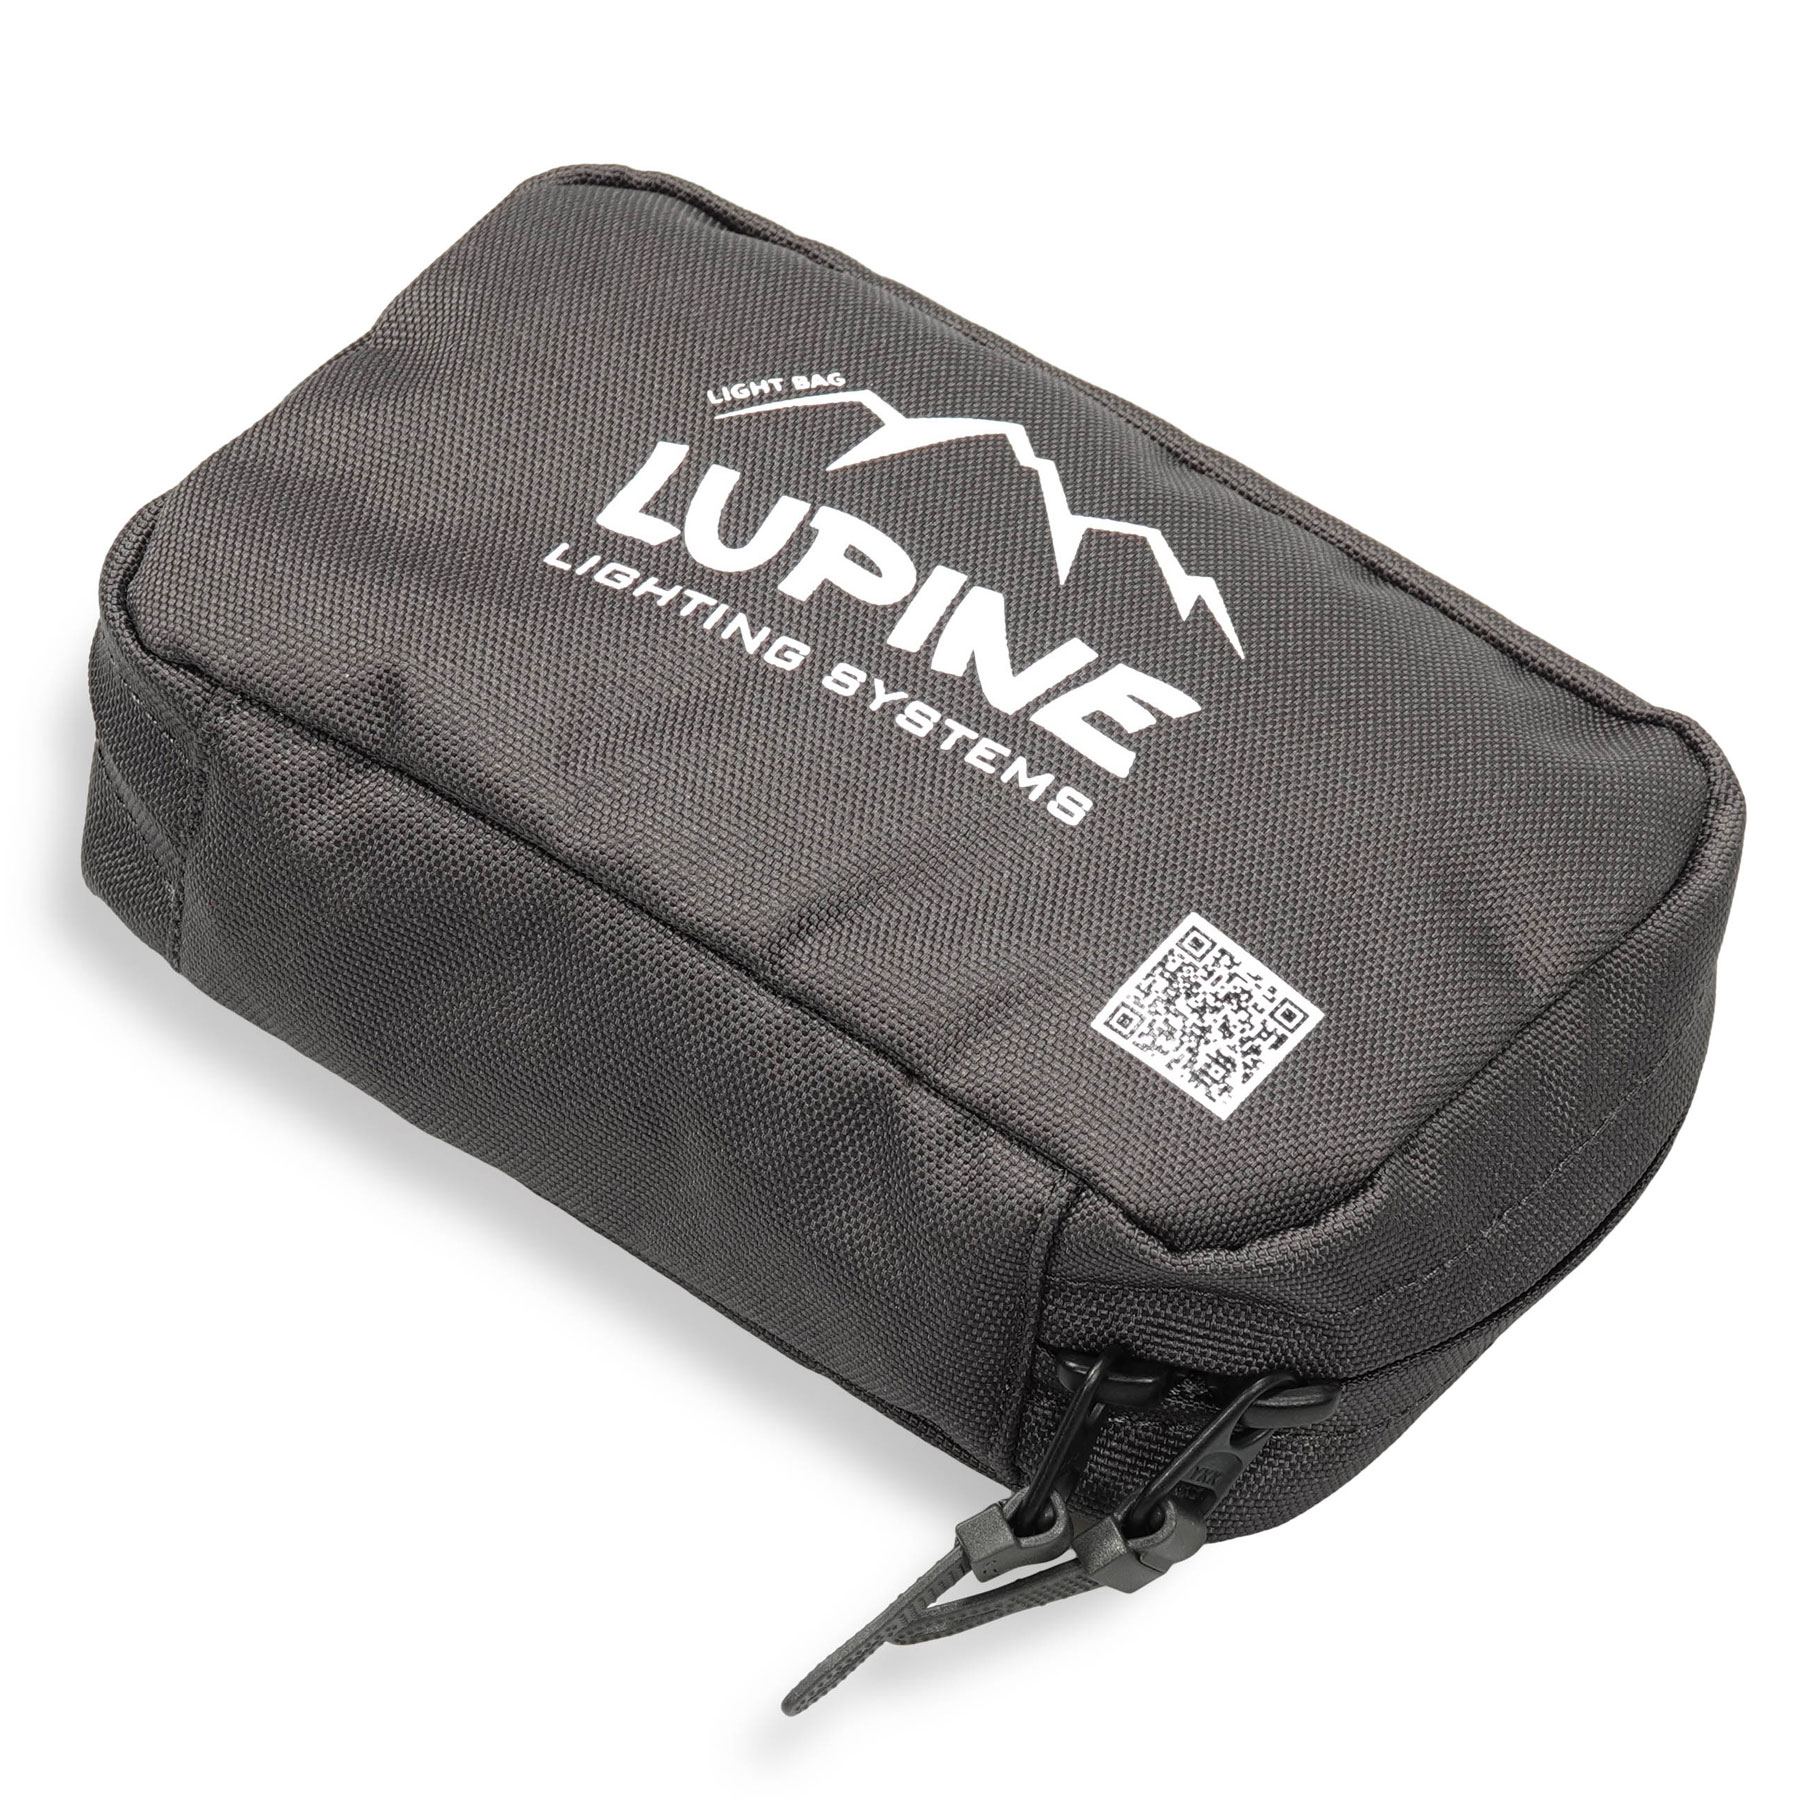 Picture of Lupine Light Bag - dark grey